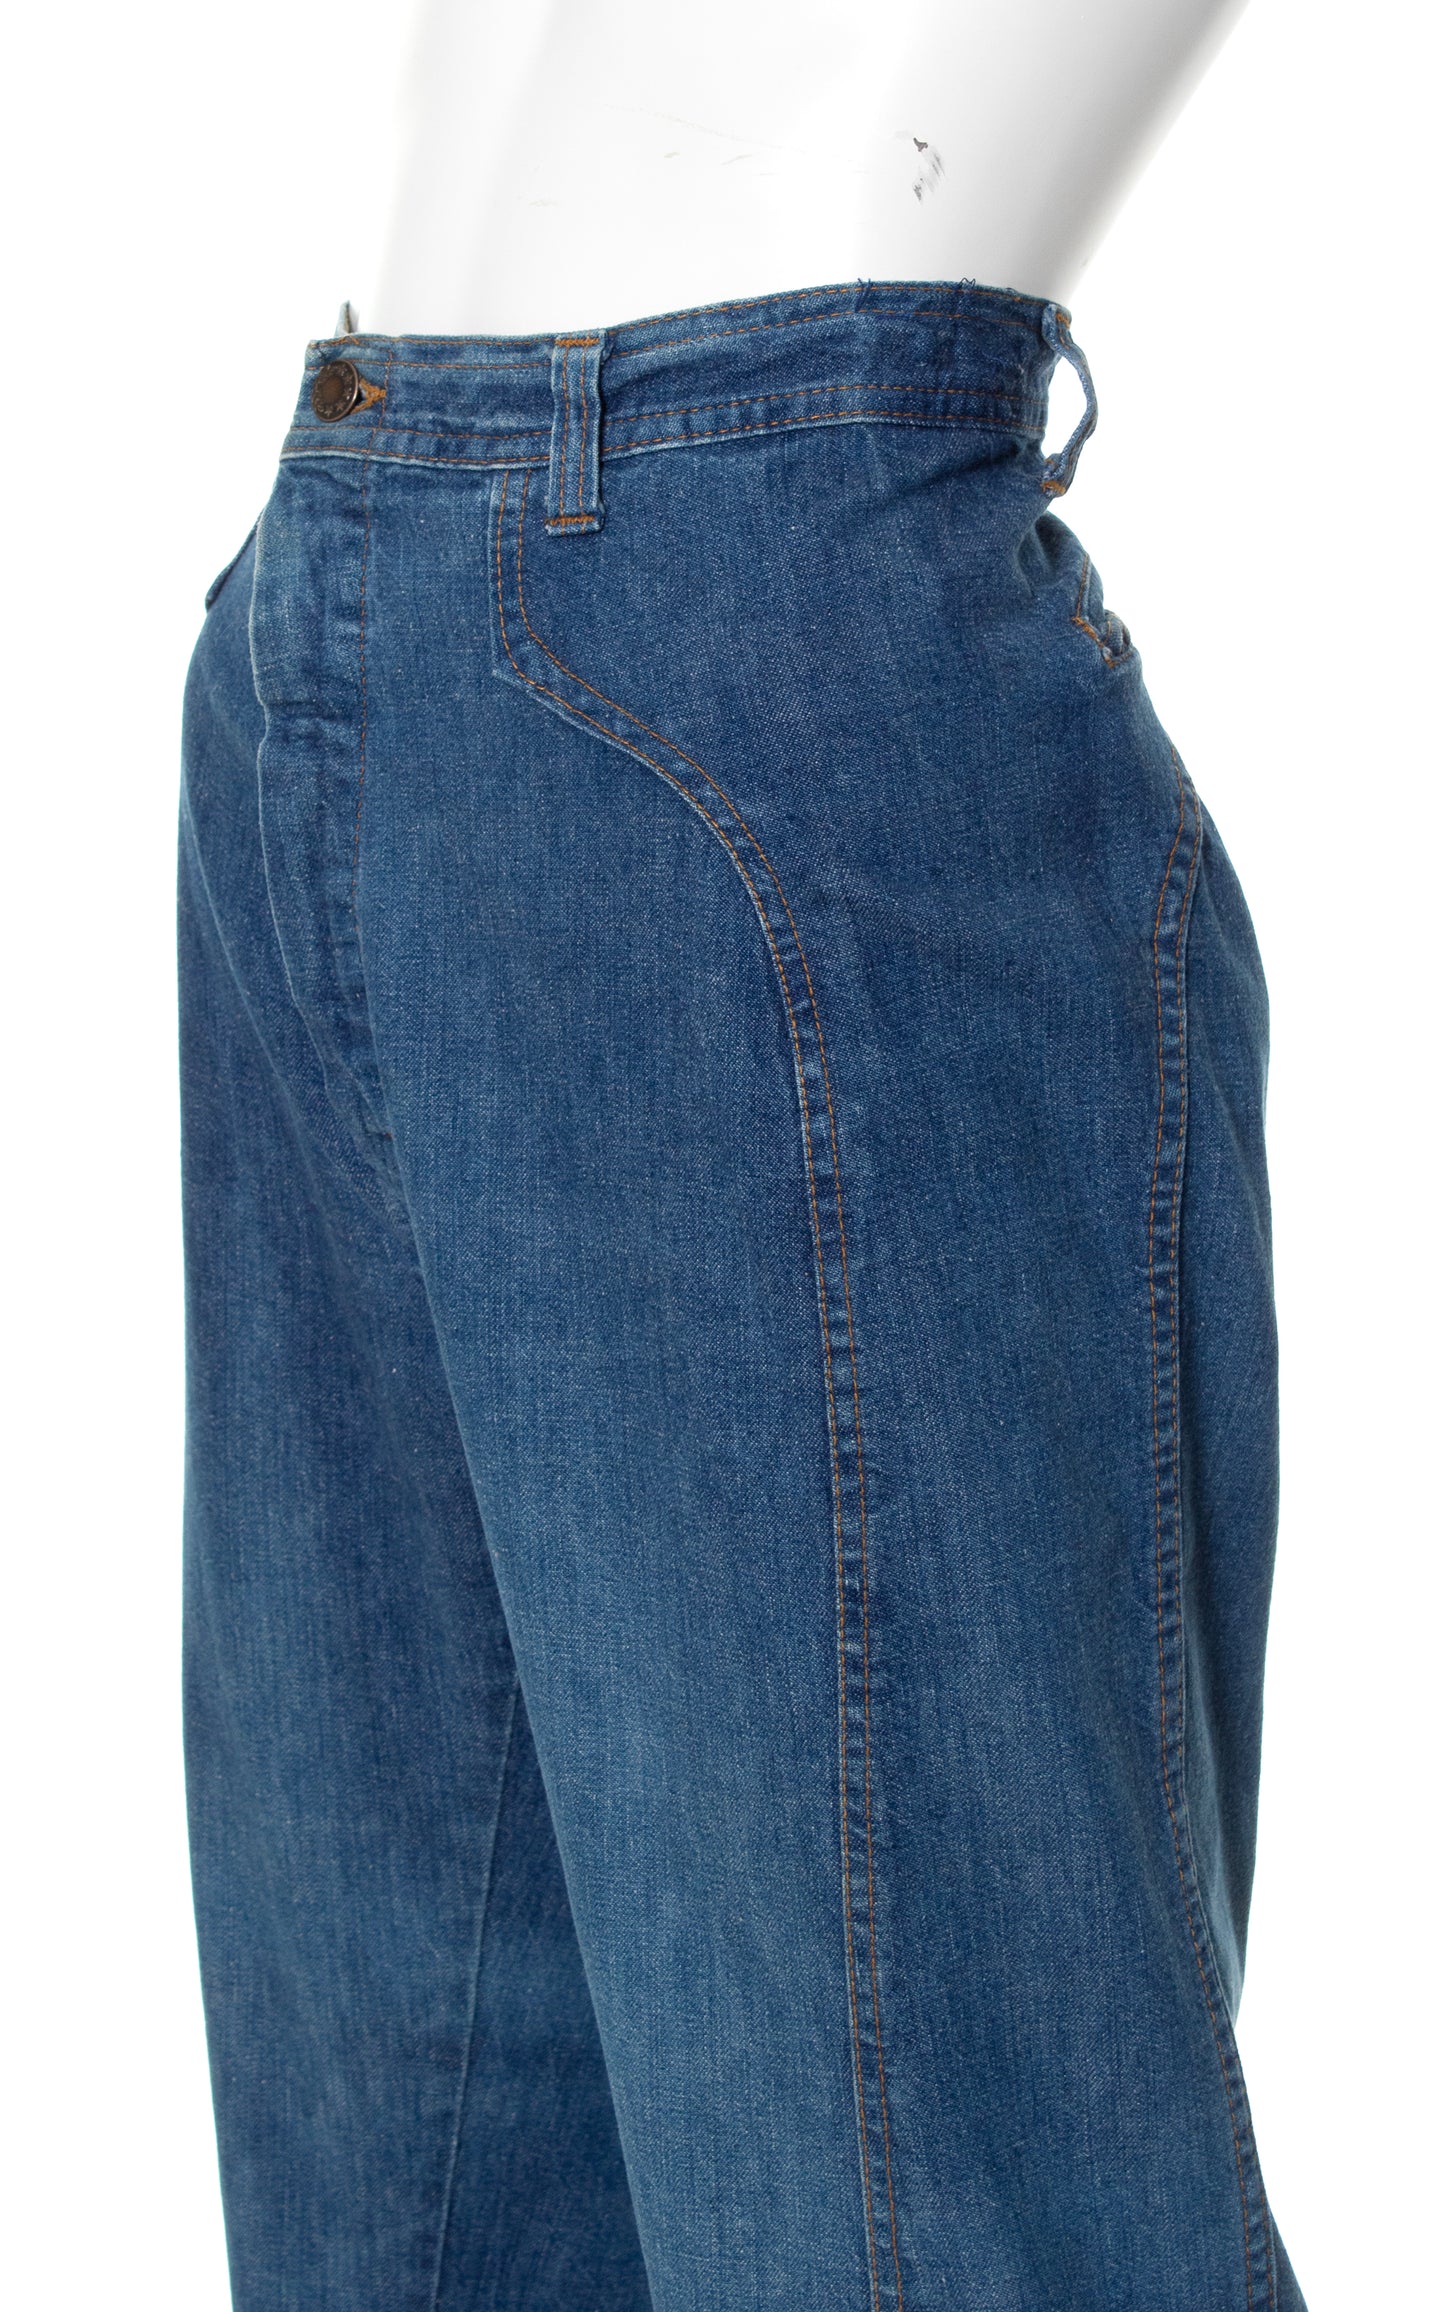 NEW ARRIVAL || 1970s Braided Trim Denim Jeans | medium